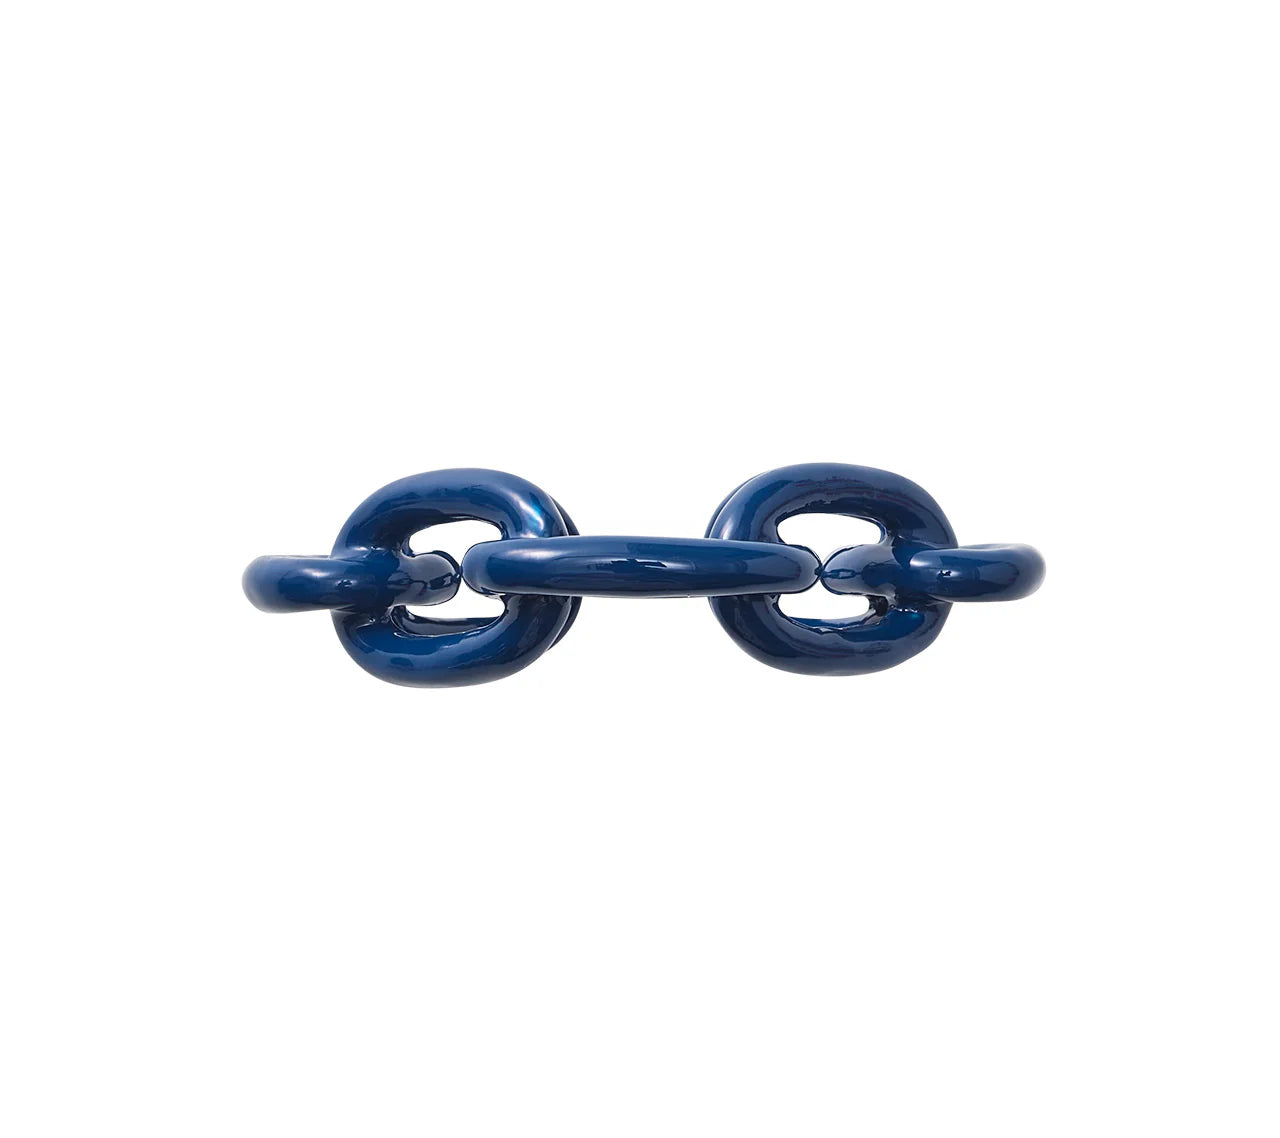 Enamel Chain Link Napkin Ring Set/4 - Navy